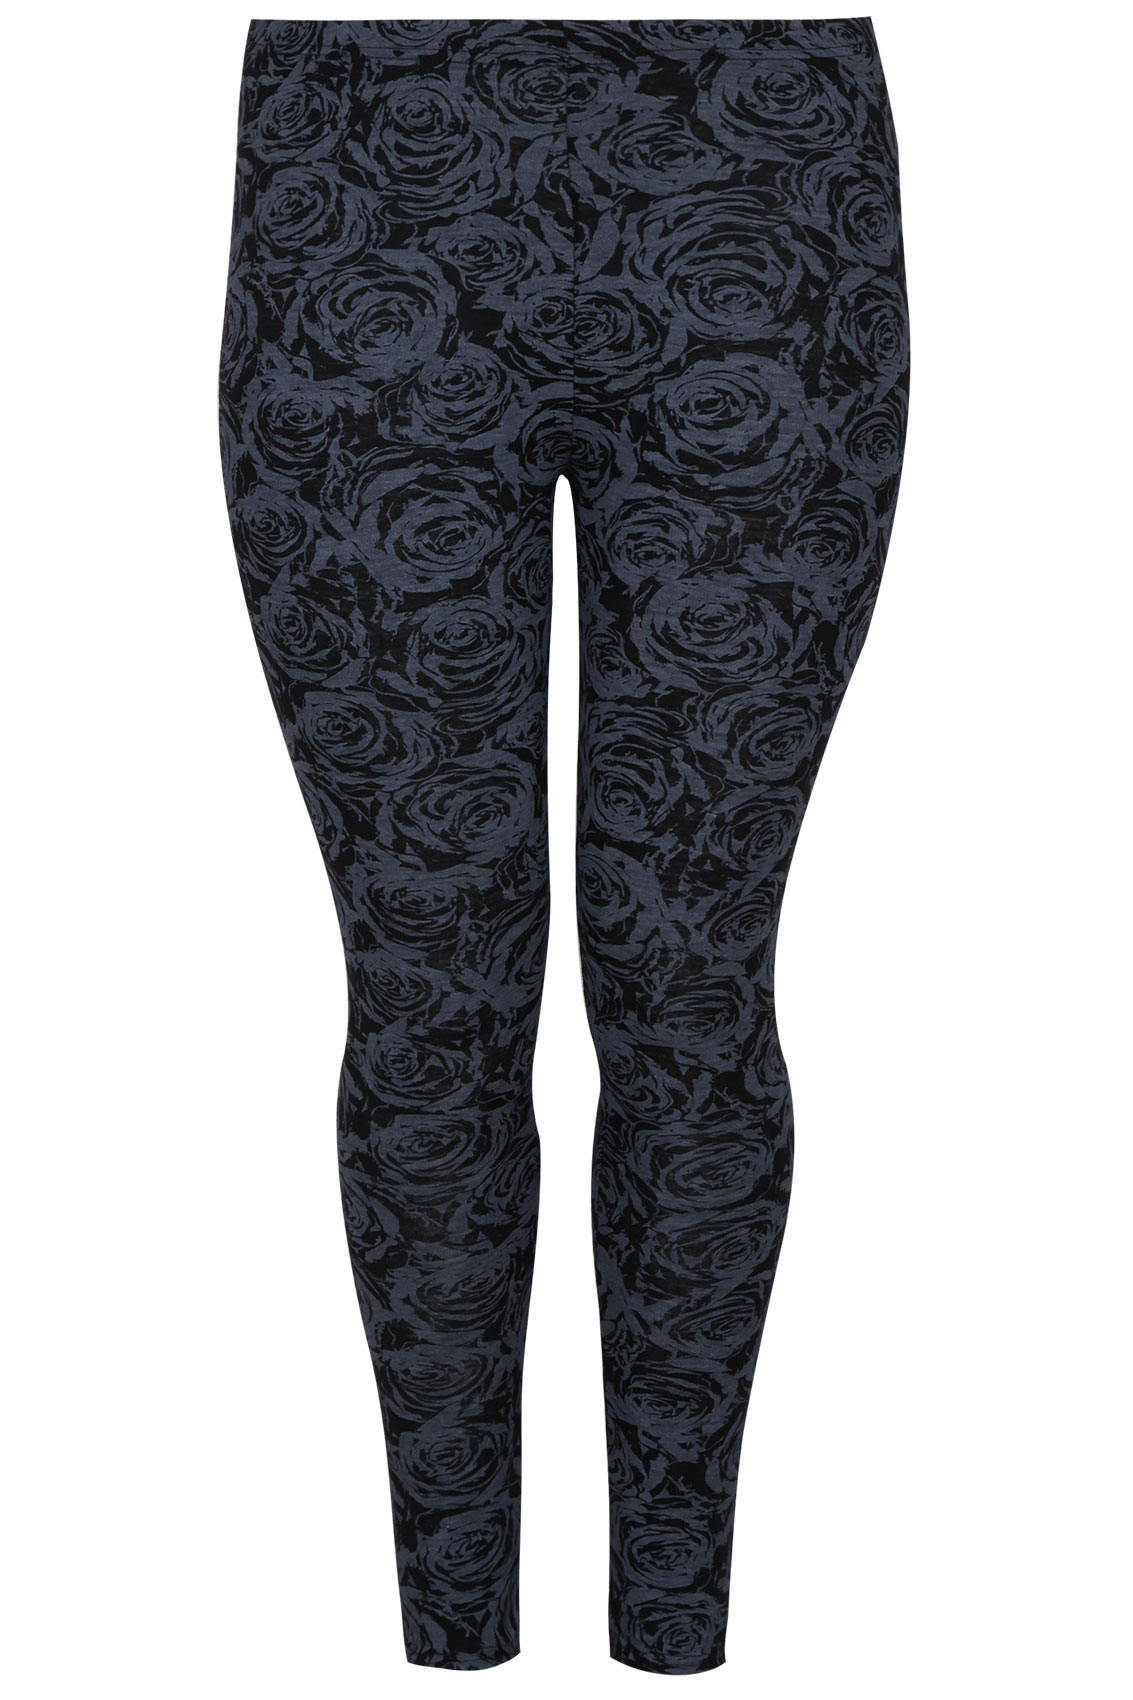 Black And Grey Rose Print Viscose Elastane Leggings plus Size 16 to 32